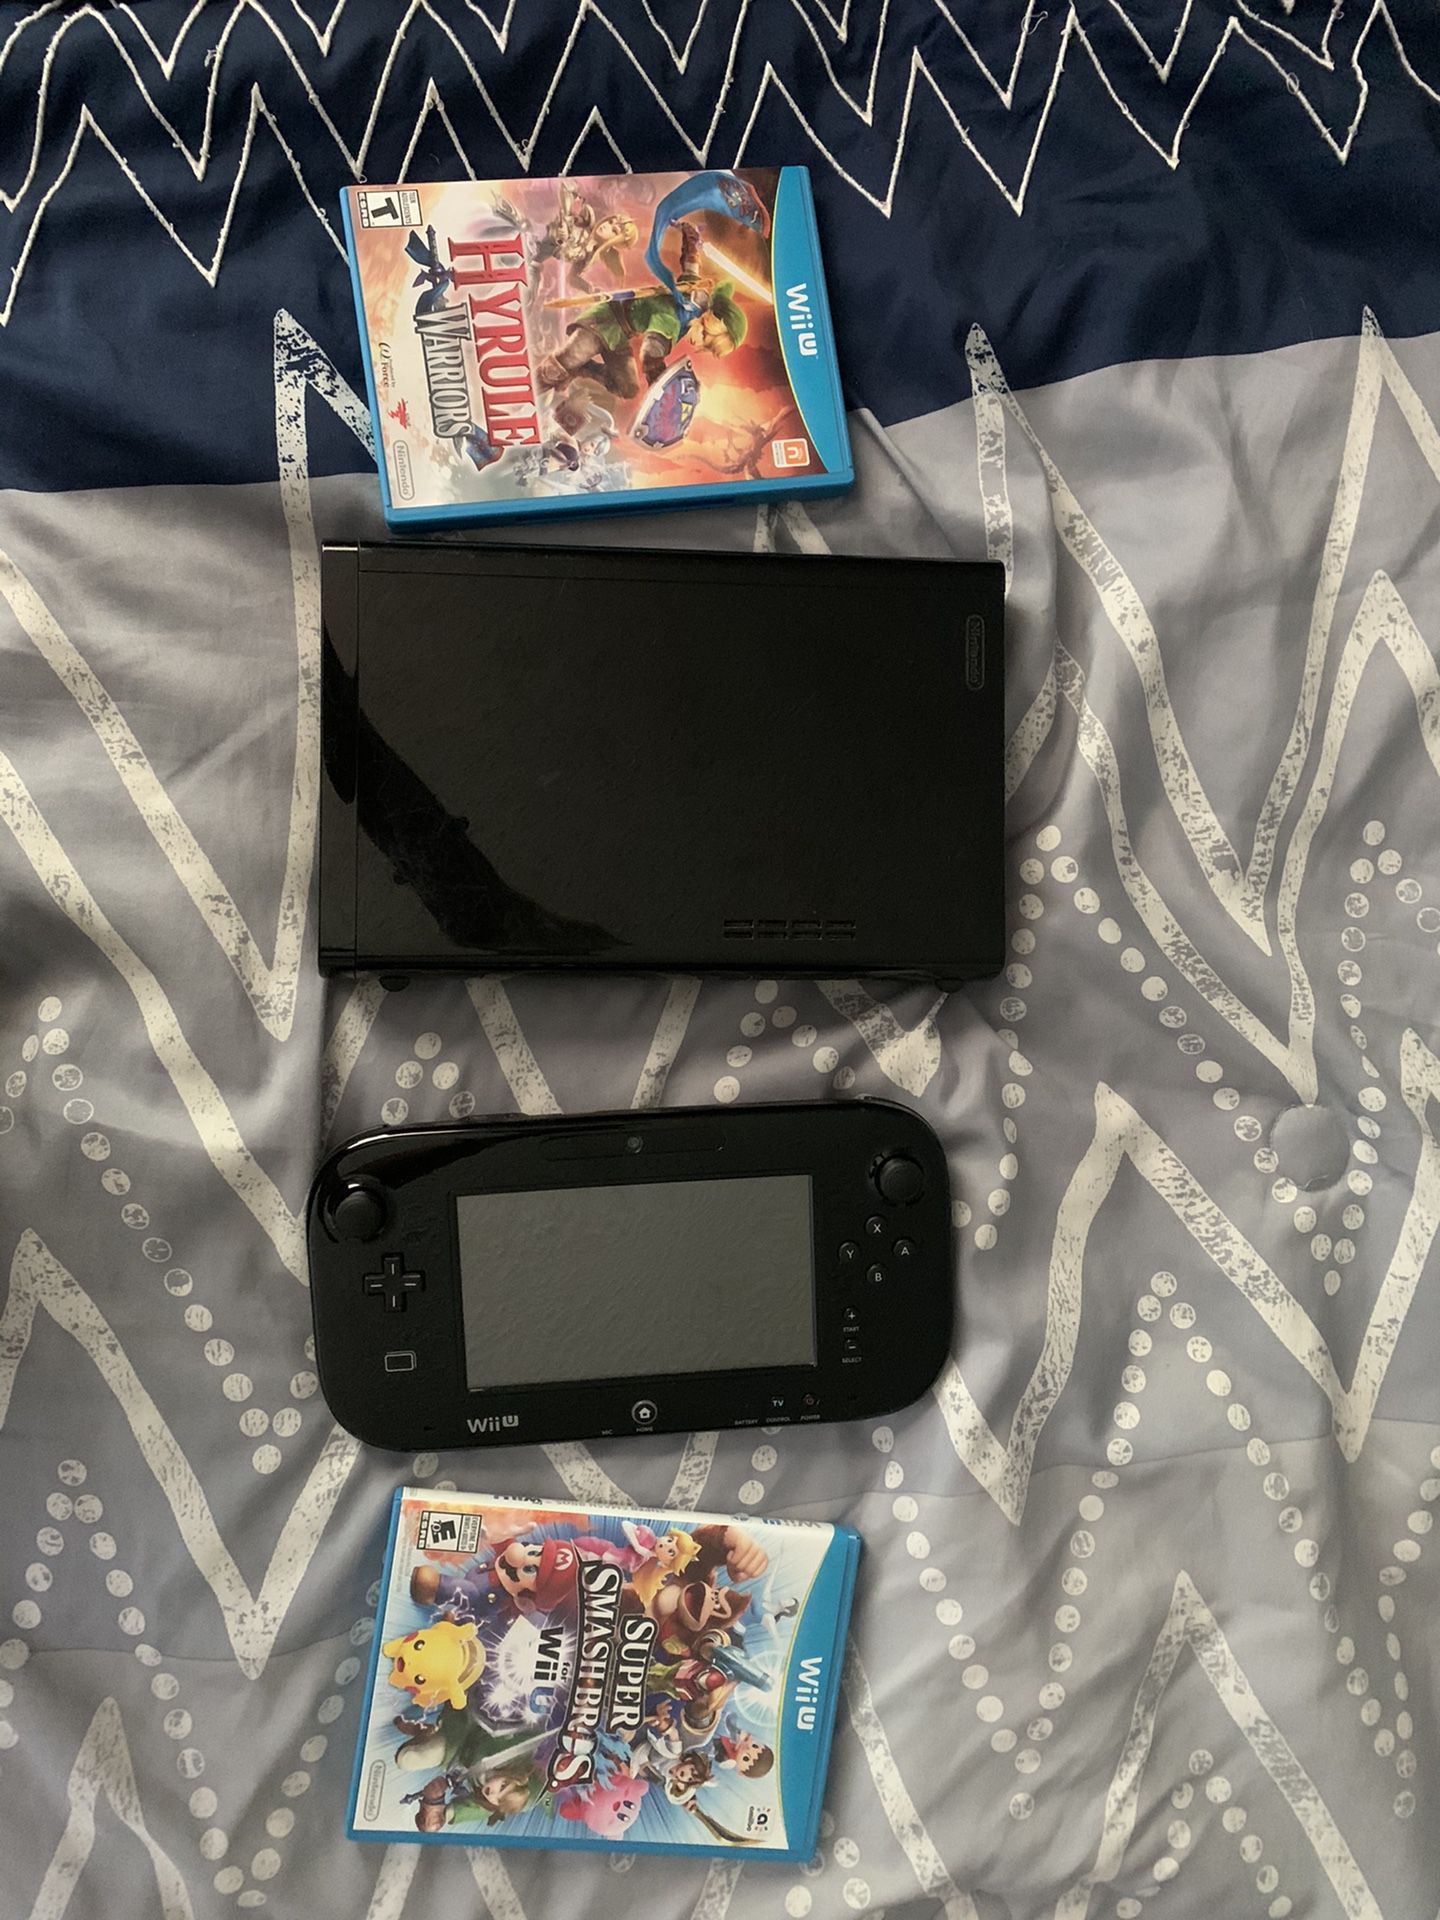 Nintendo Wii U with 2 games